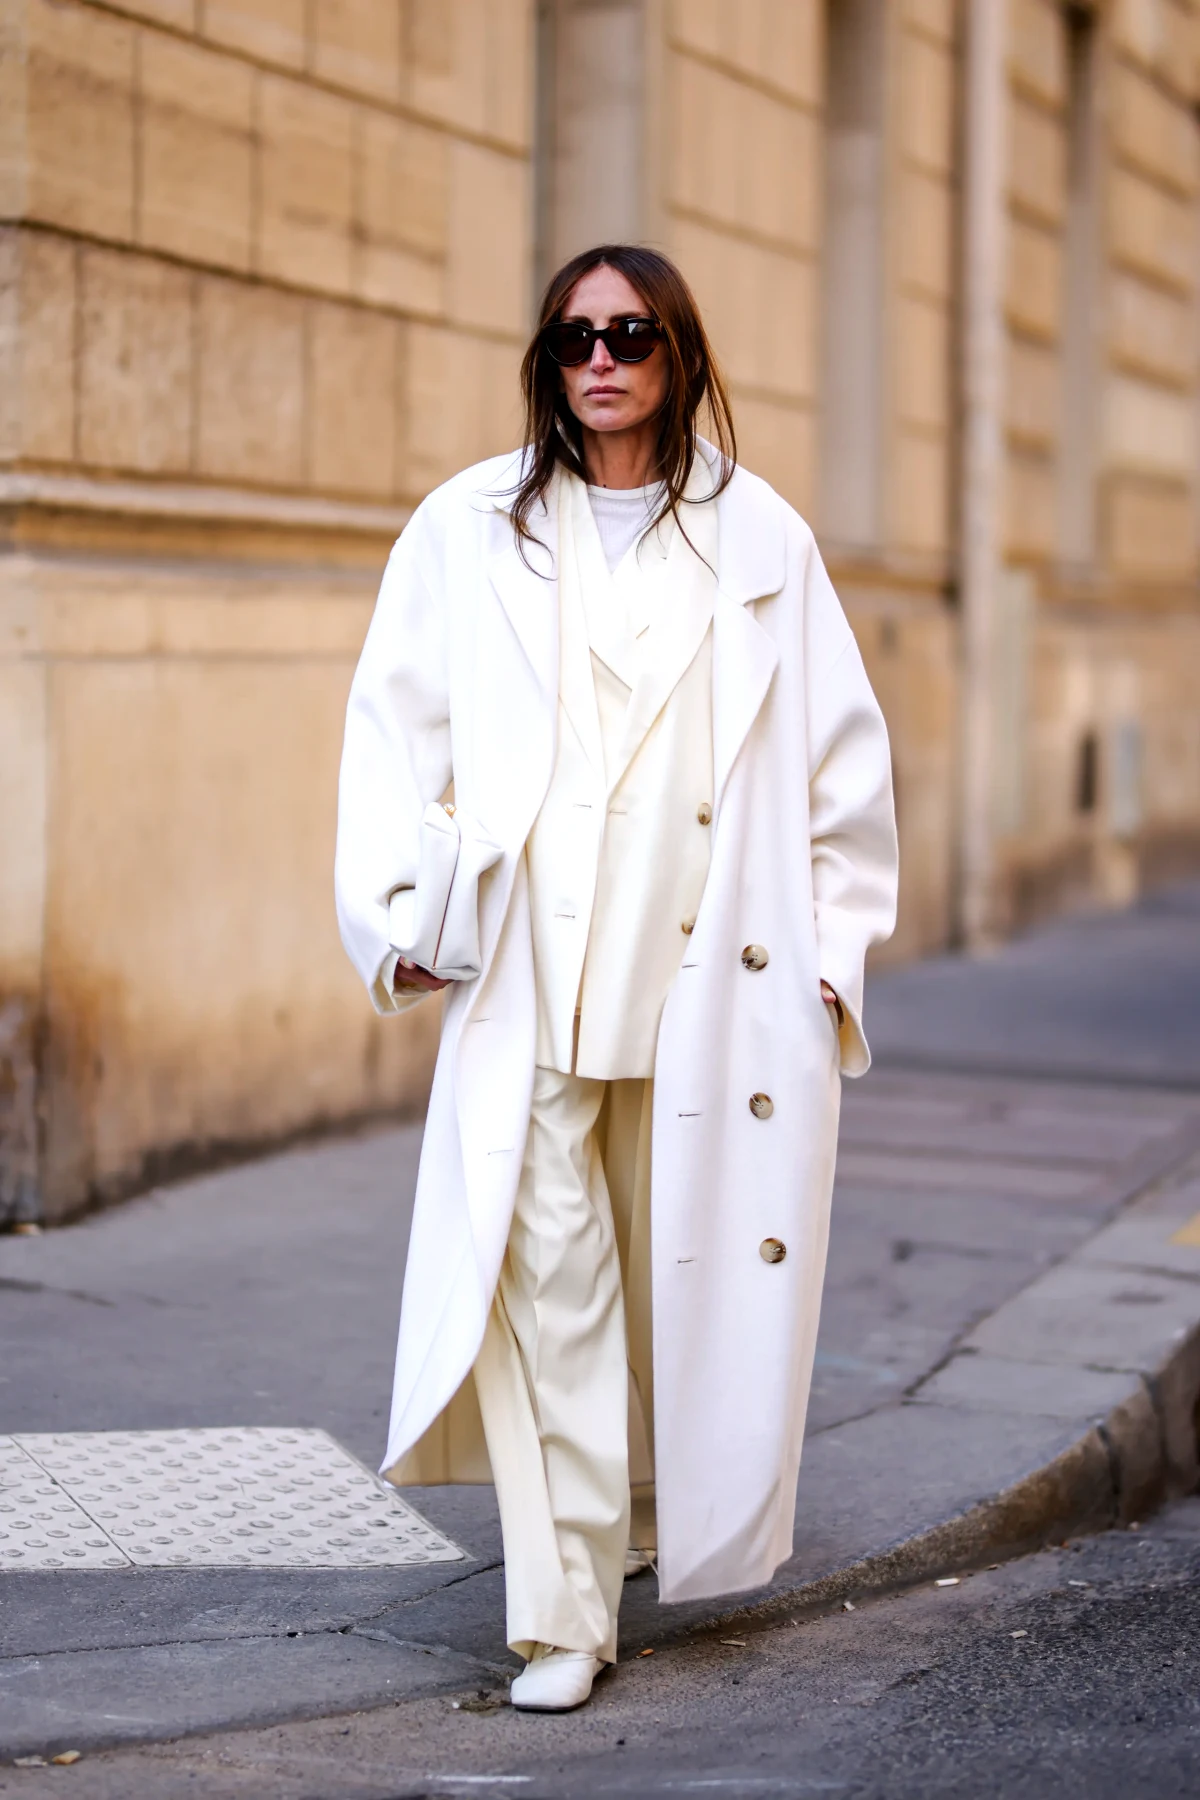 tendances minimalistes femme 50 ans total look blanc